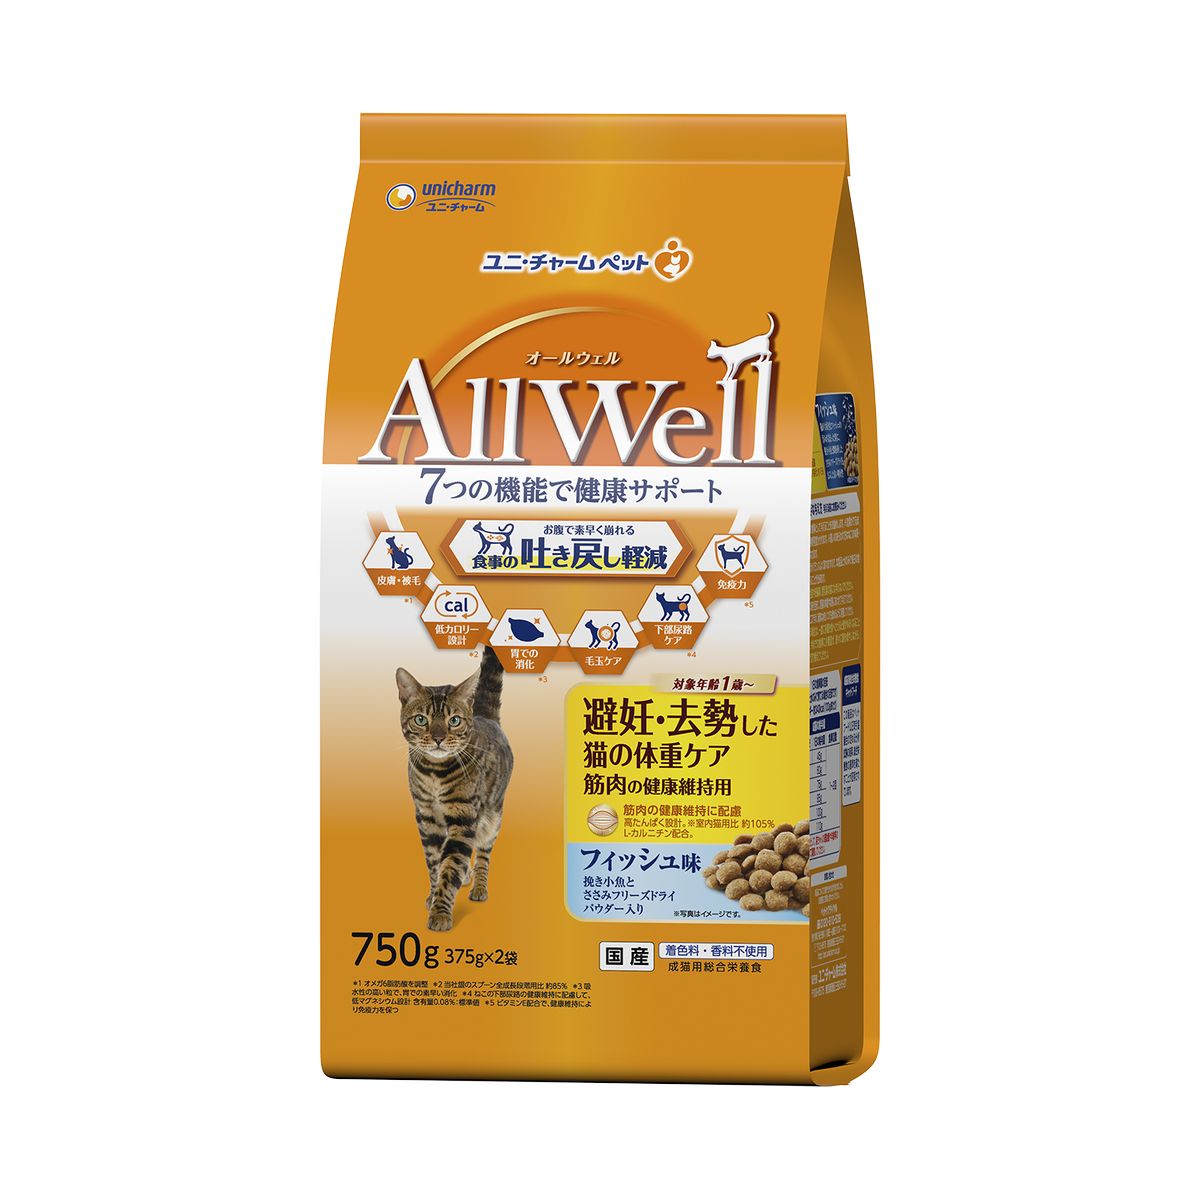 AllWell避妊・去勢した猫の体重ケア筋肉の健康維持用フィッシュ味挽き小魚とささみフリーズドライ750g×9